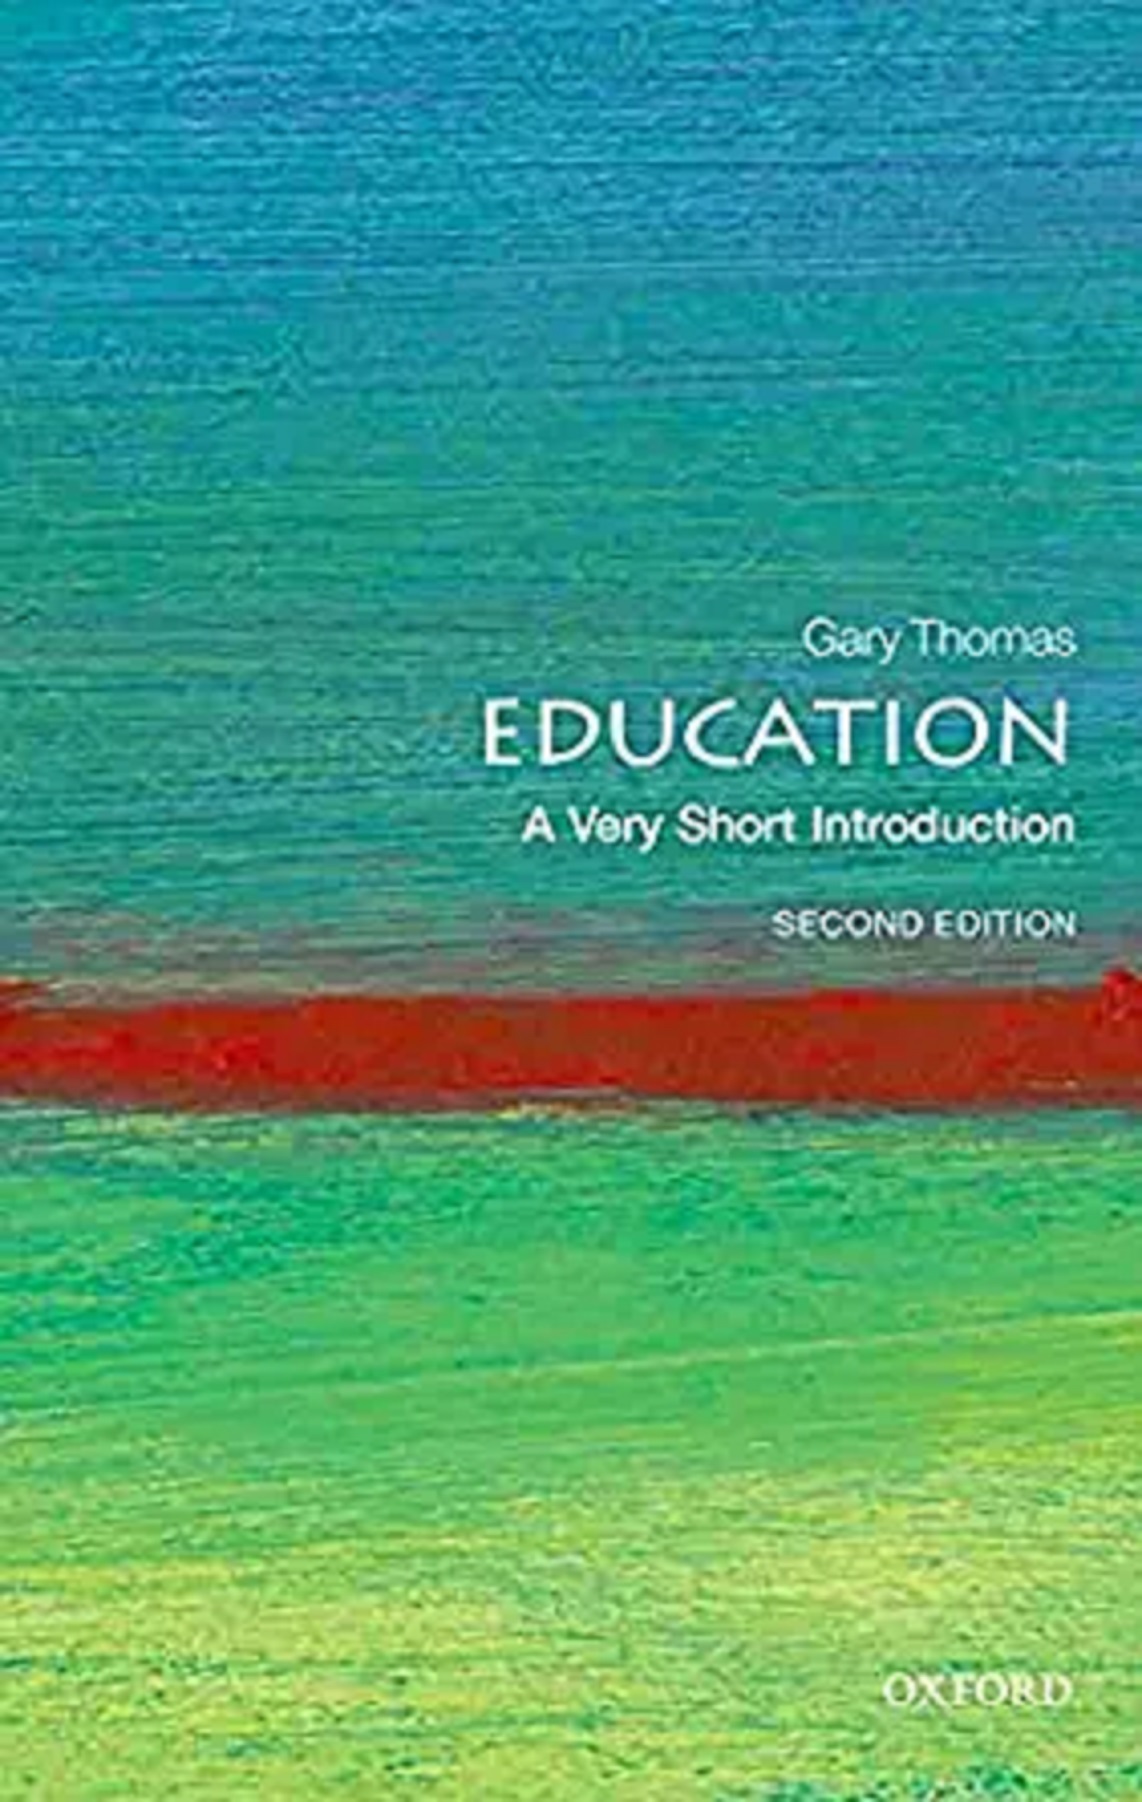 Education | Gary Thomas